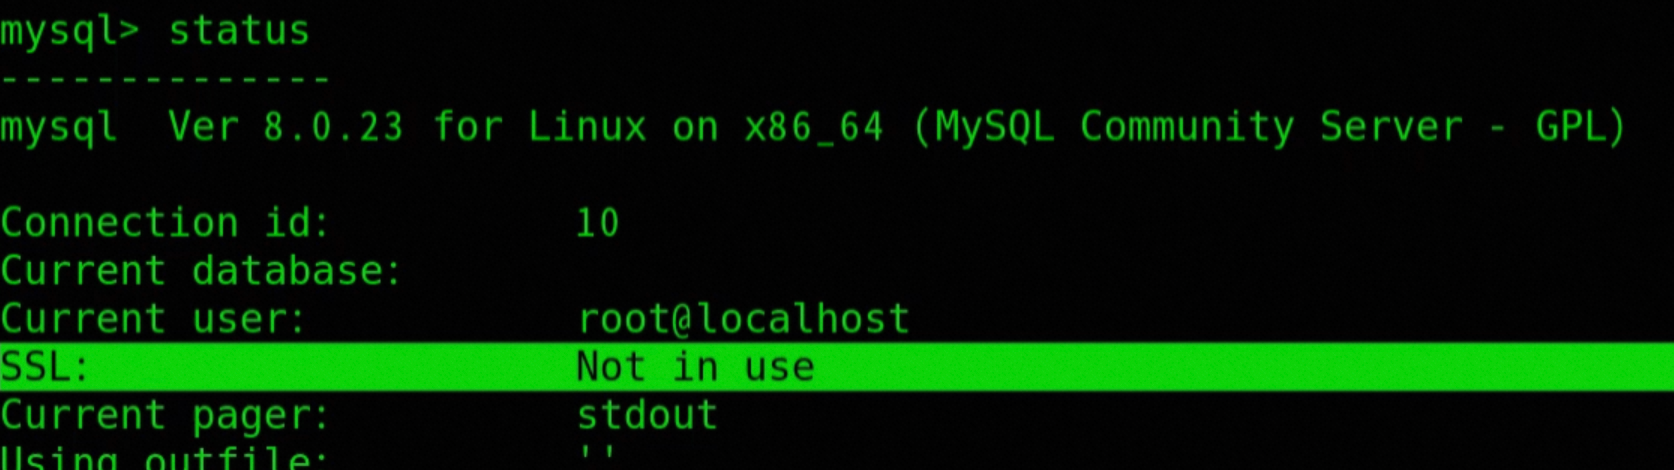 MYSQL8 Security - SSL Authentication